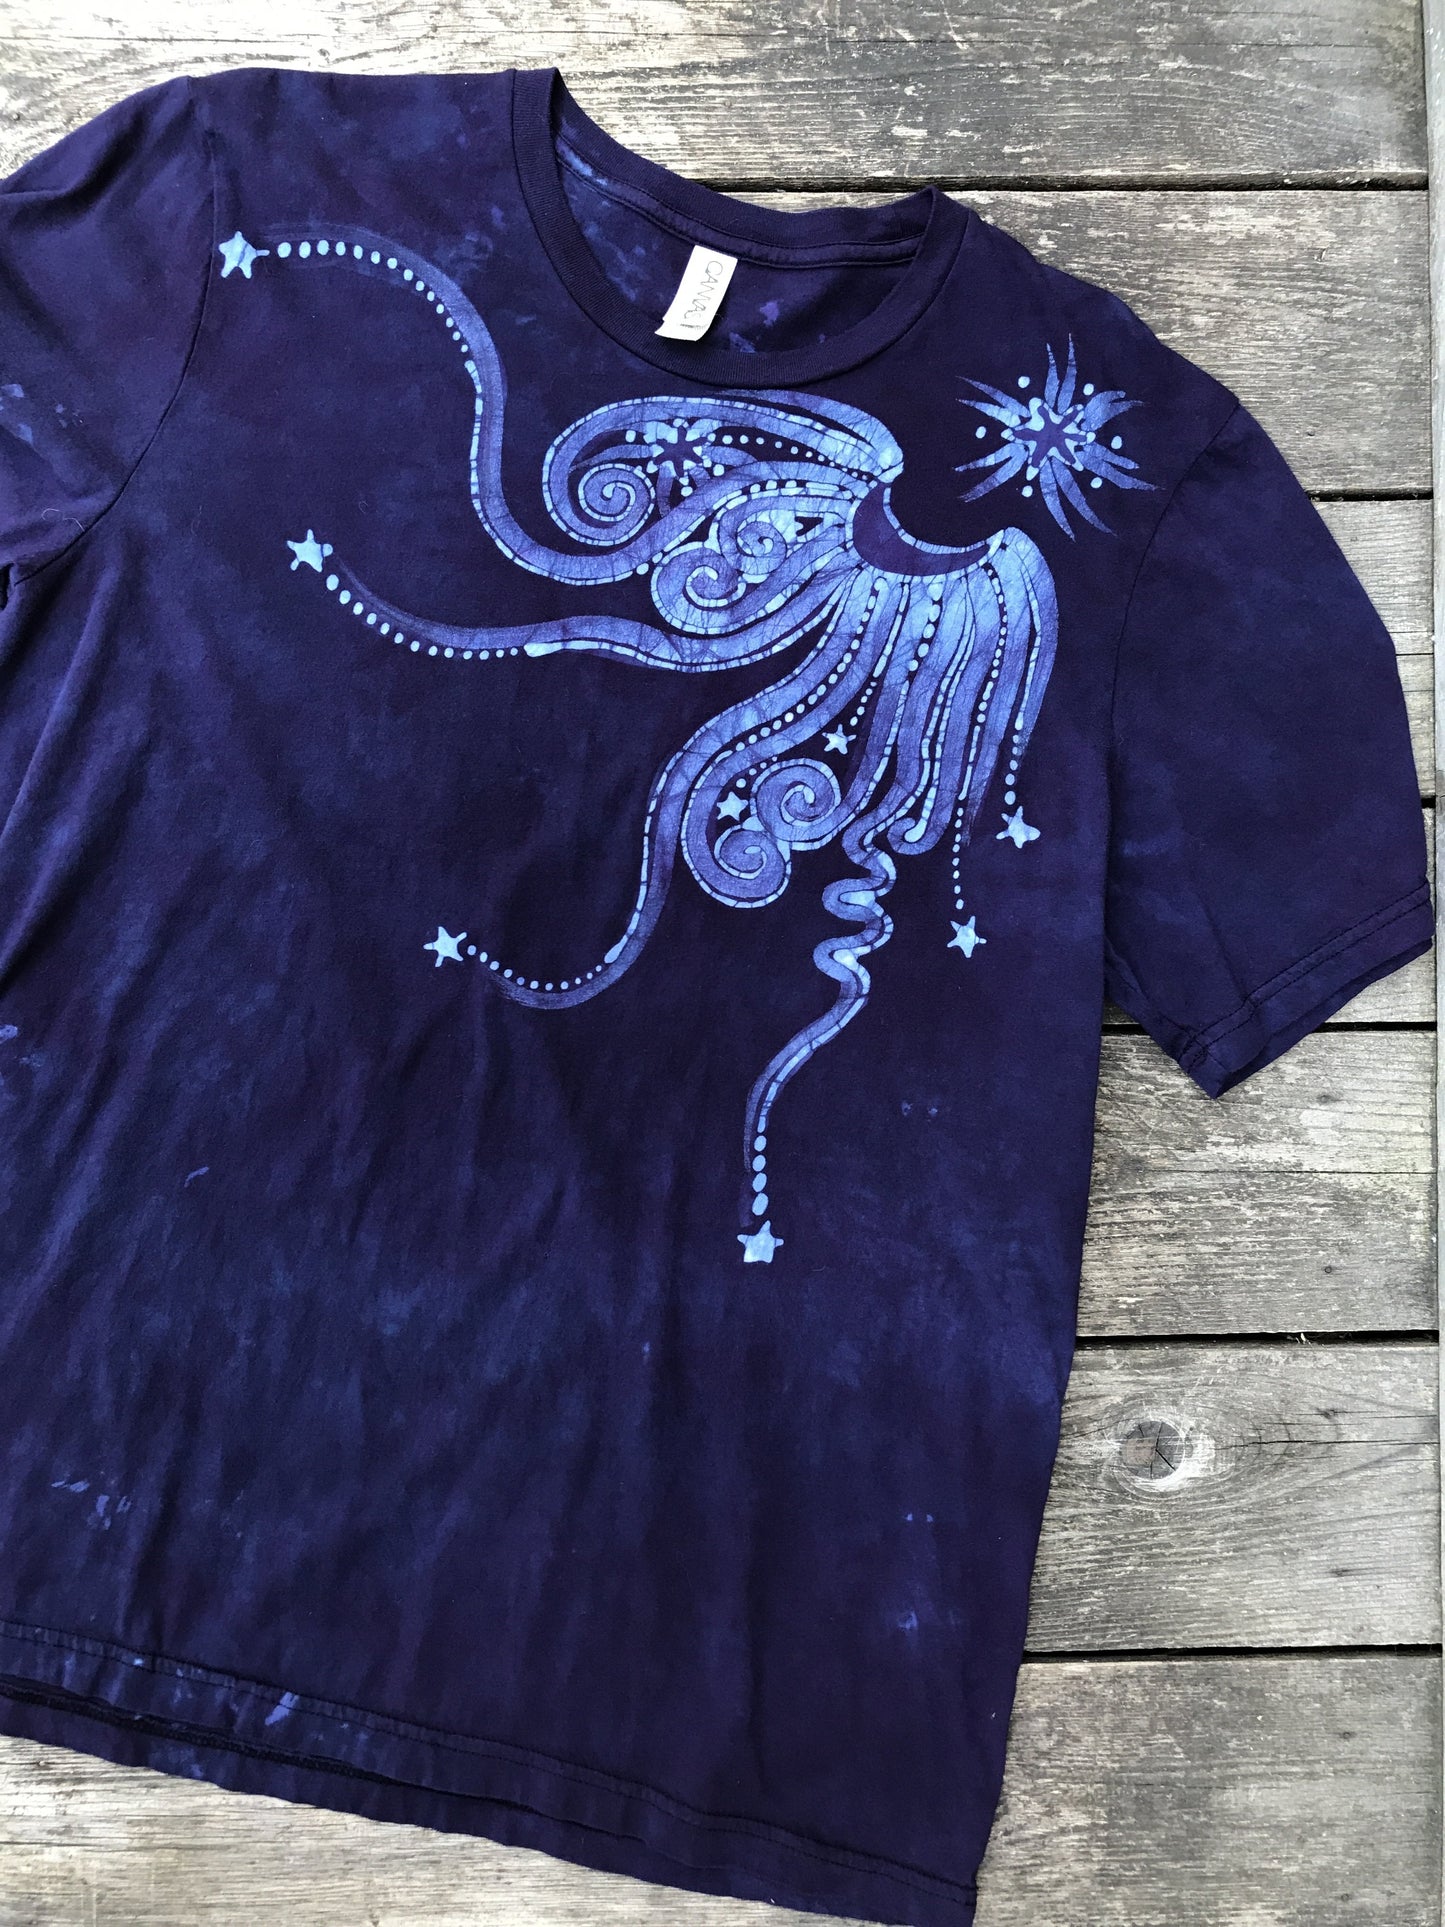 Pura Vida Moonlight Handmade Batikwalla Tshirt - Size XL